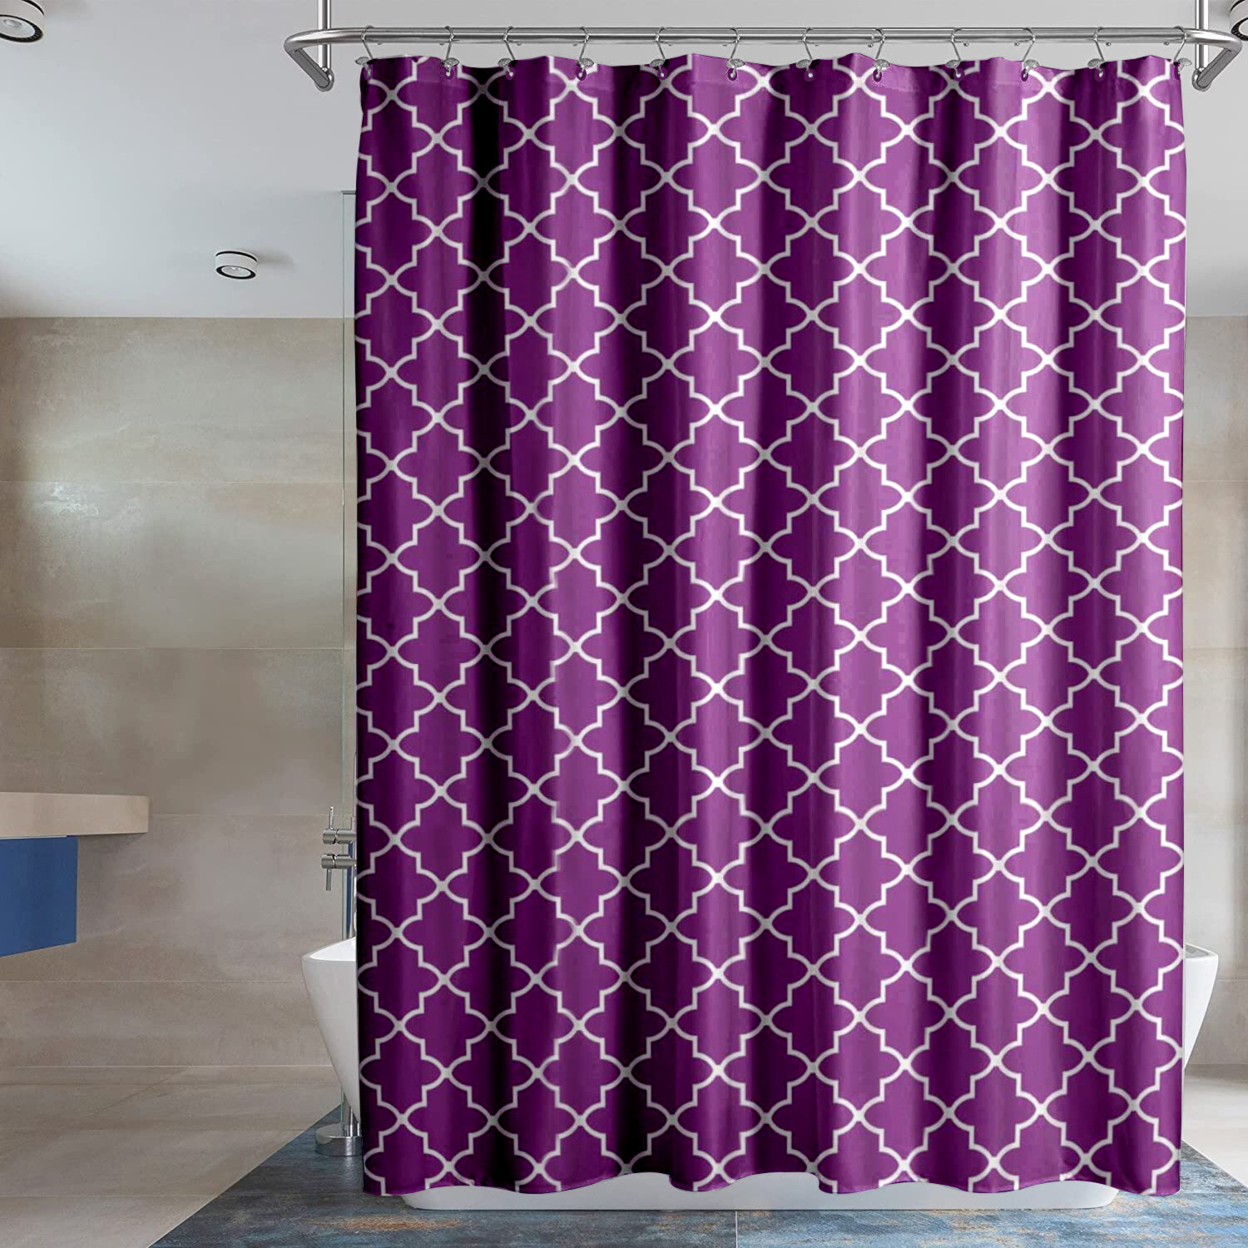 Water-Proof Printed Peva Shower Curtain - 1-Pack, Print